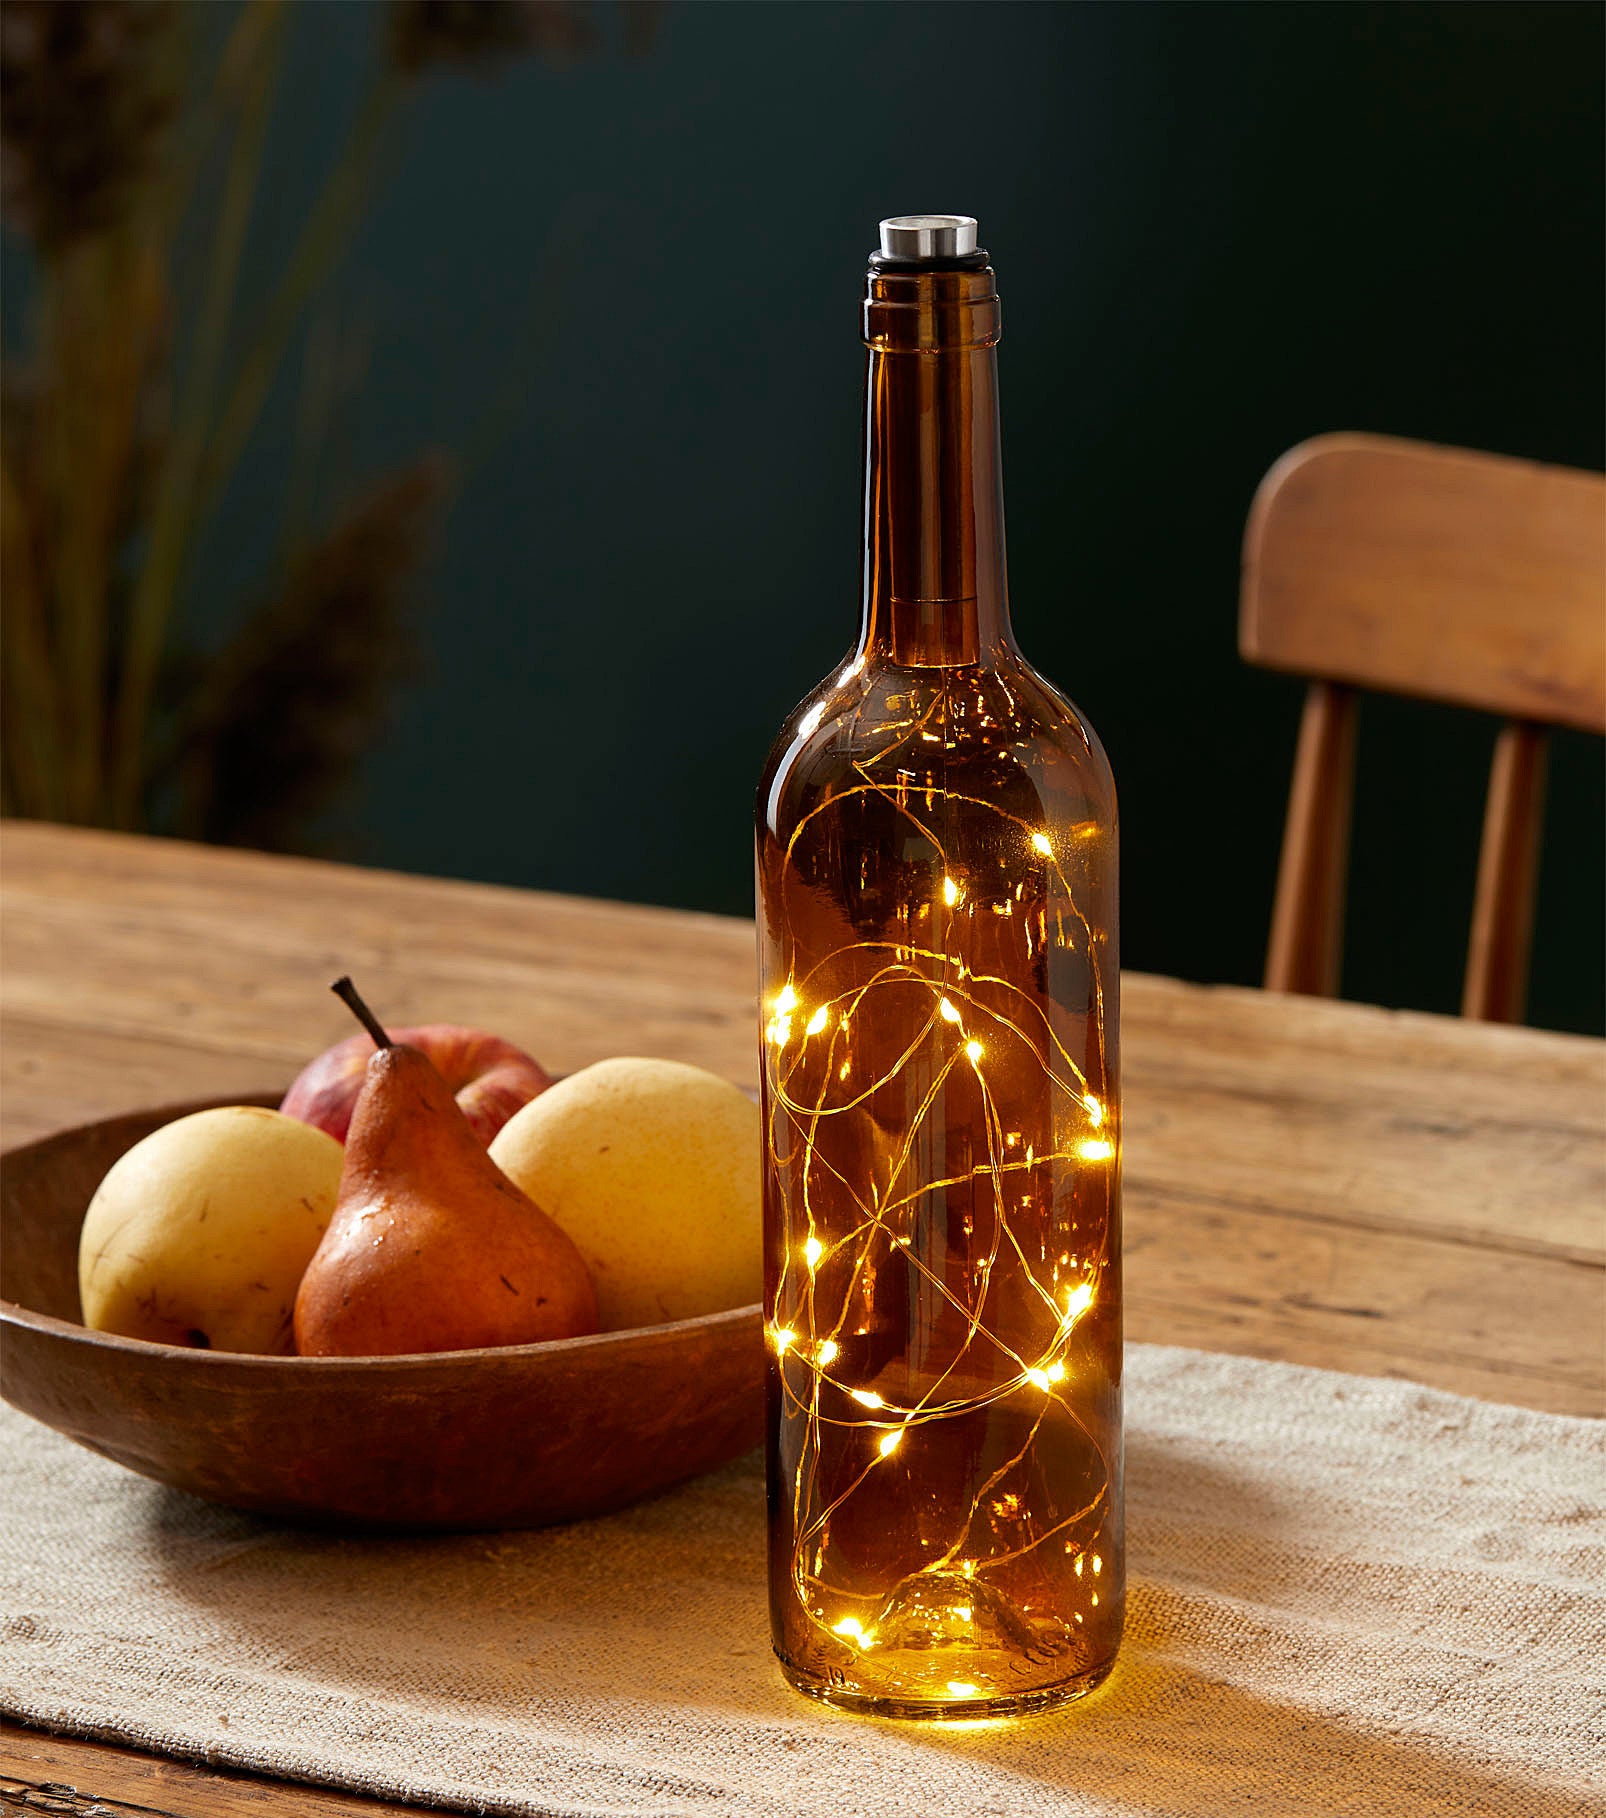 A glowing wine bottle with fairy lights inside 